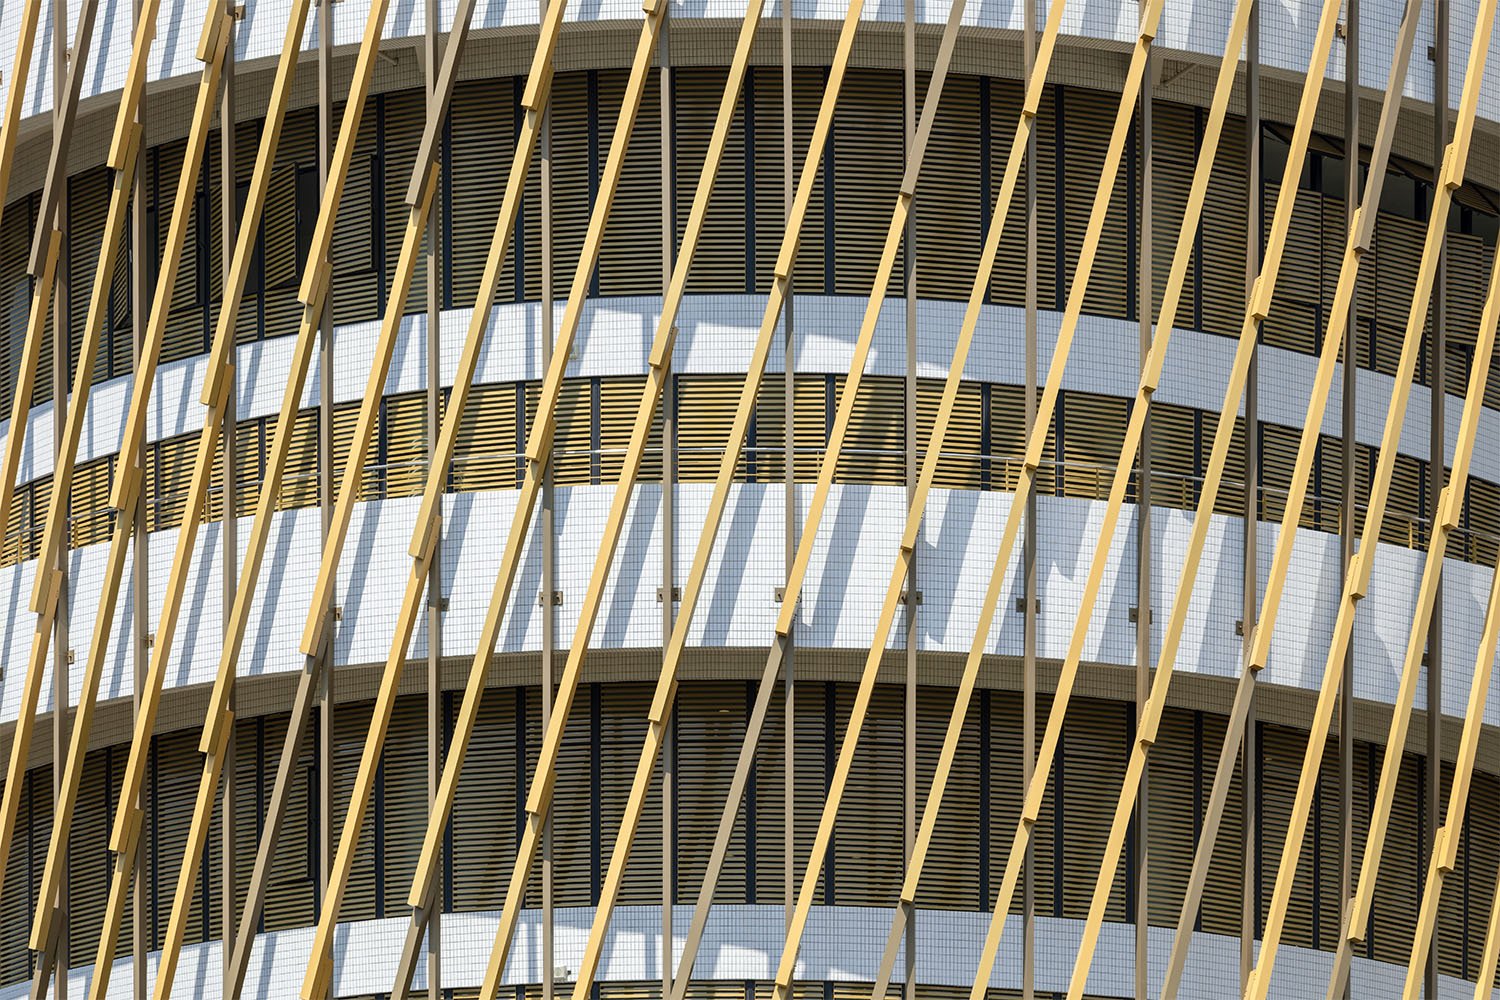 The texture of facade materials | Yu-Chen Chao